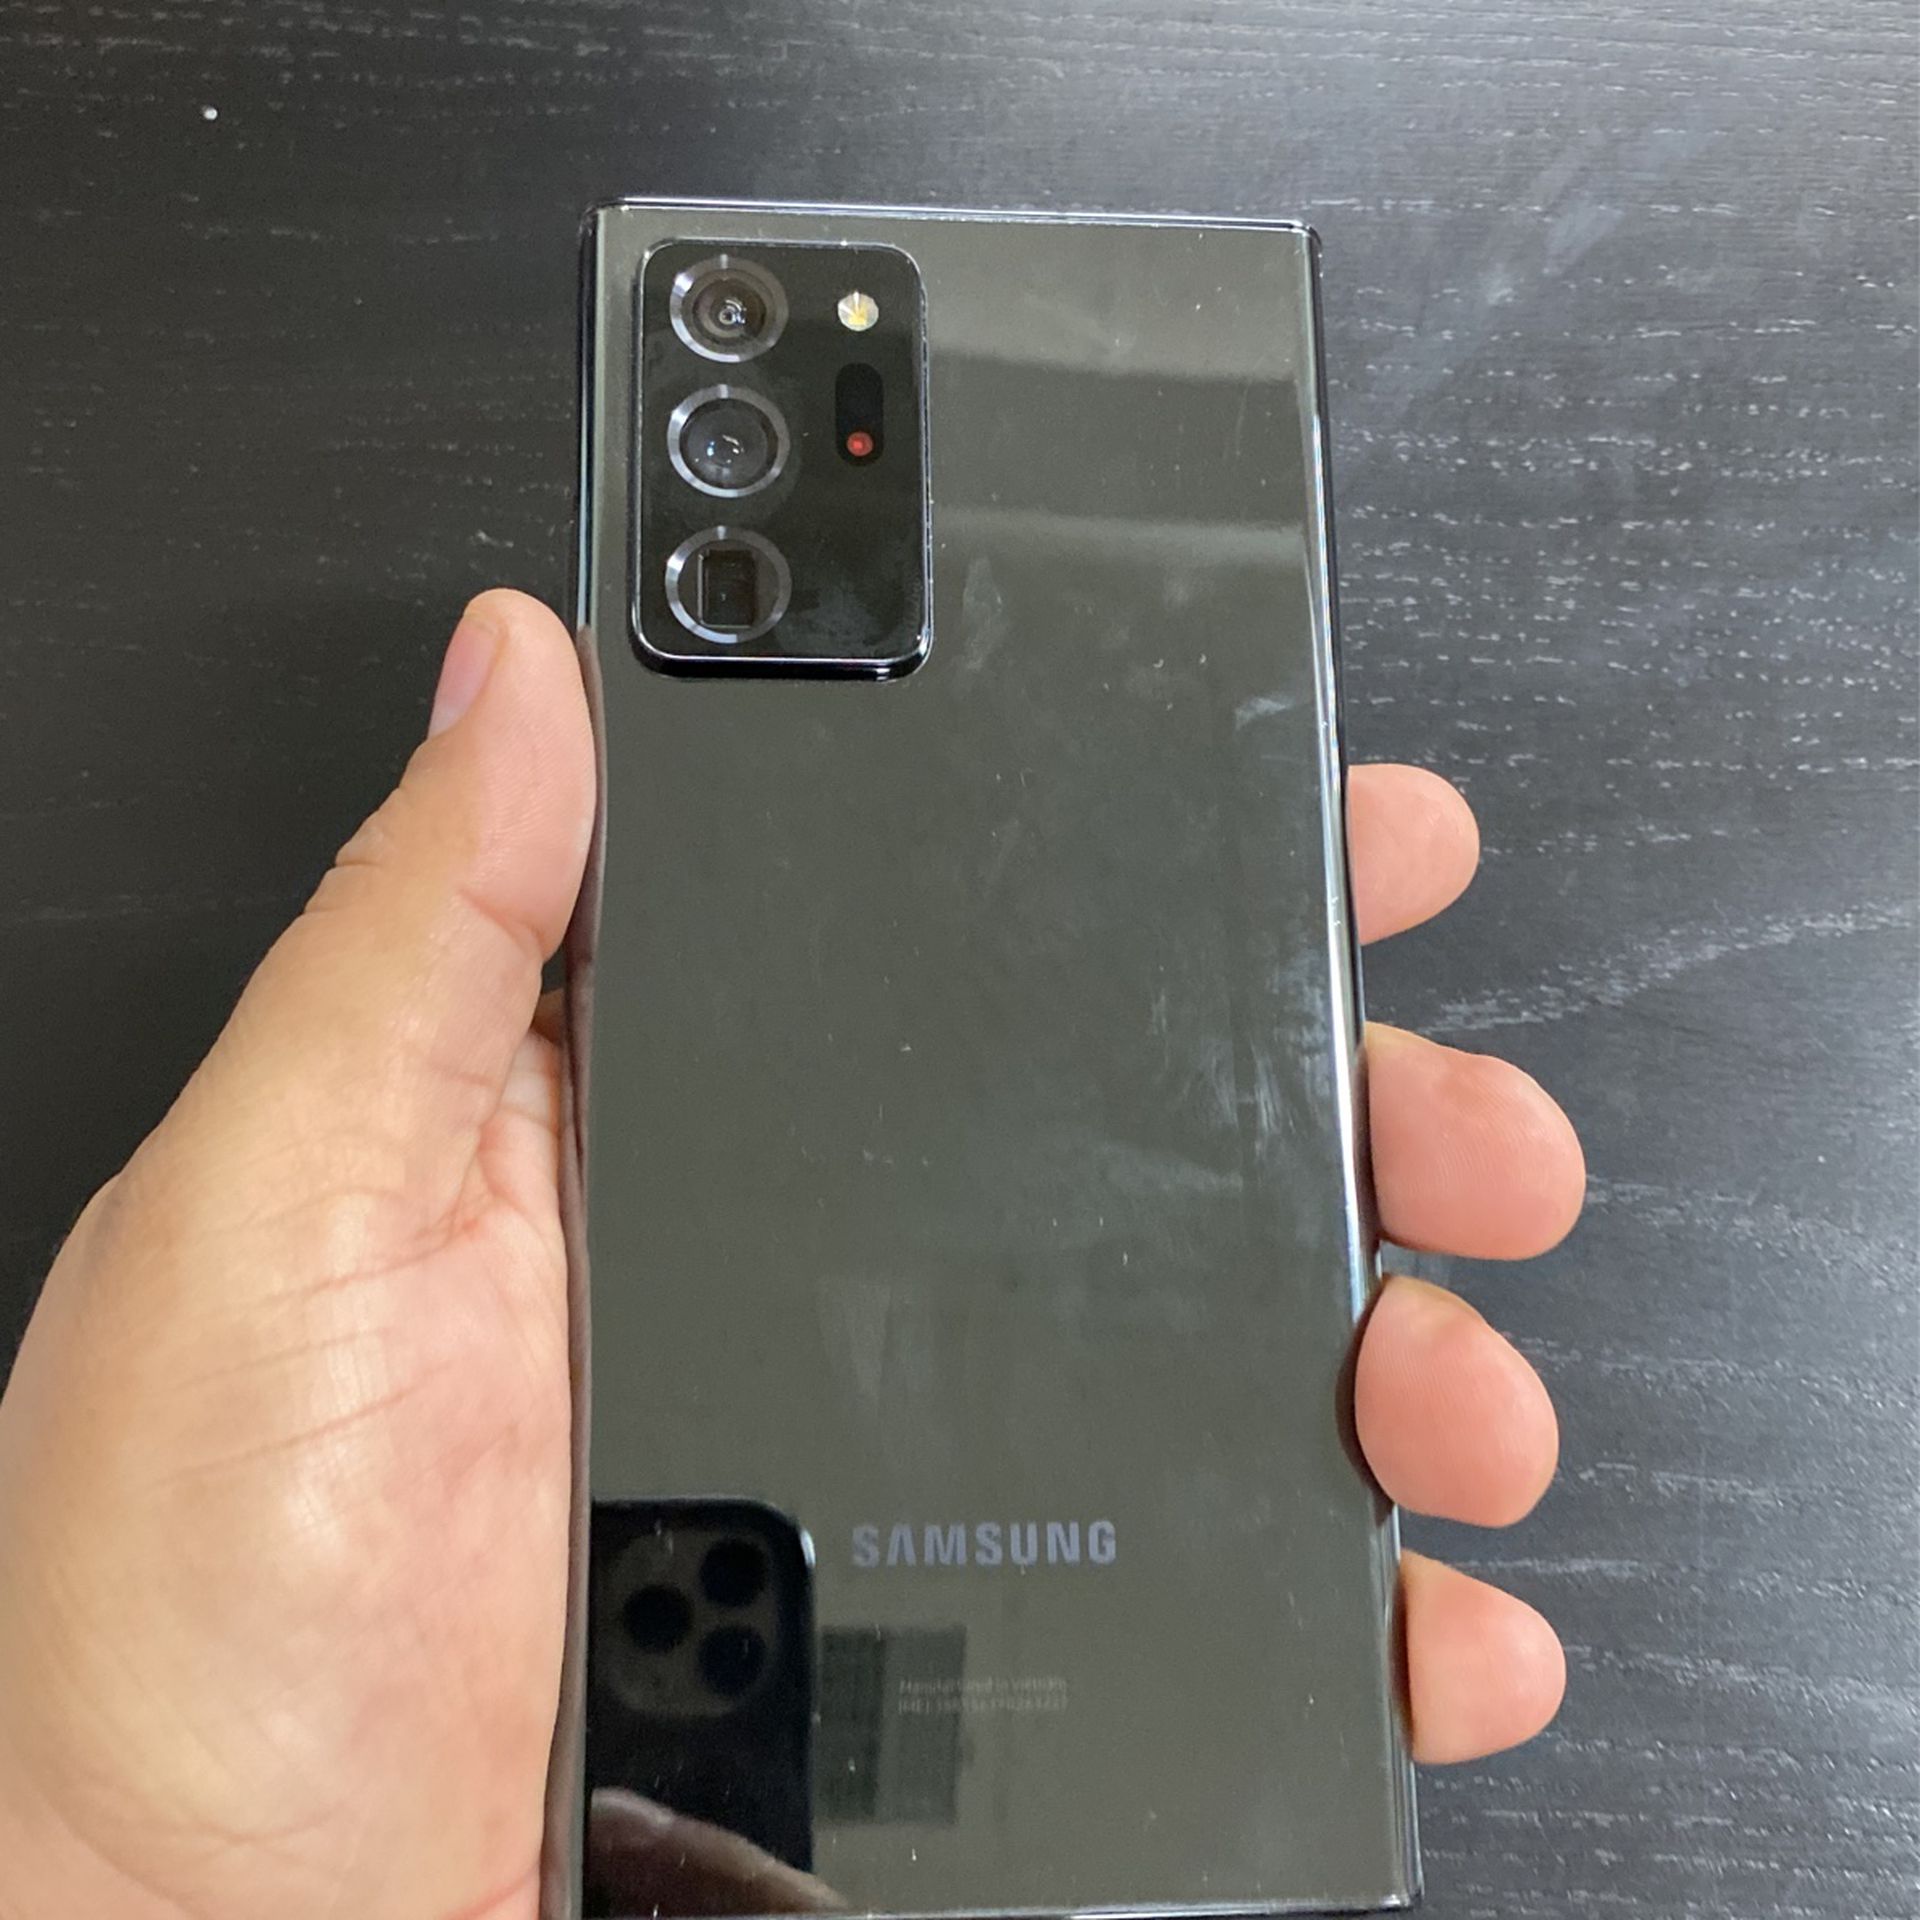 Samsung Galaxy S21 Ultra 5G (128GB, 12gb) 6.8'' AMOLED 2X, 108MP Camera, Volte (Fully Unlocked for AT&T, Verizon, T-Mobile, Global) G998u1 (W